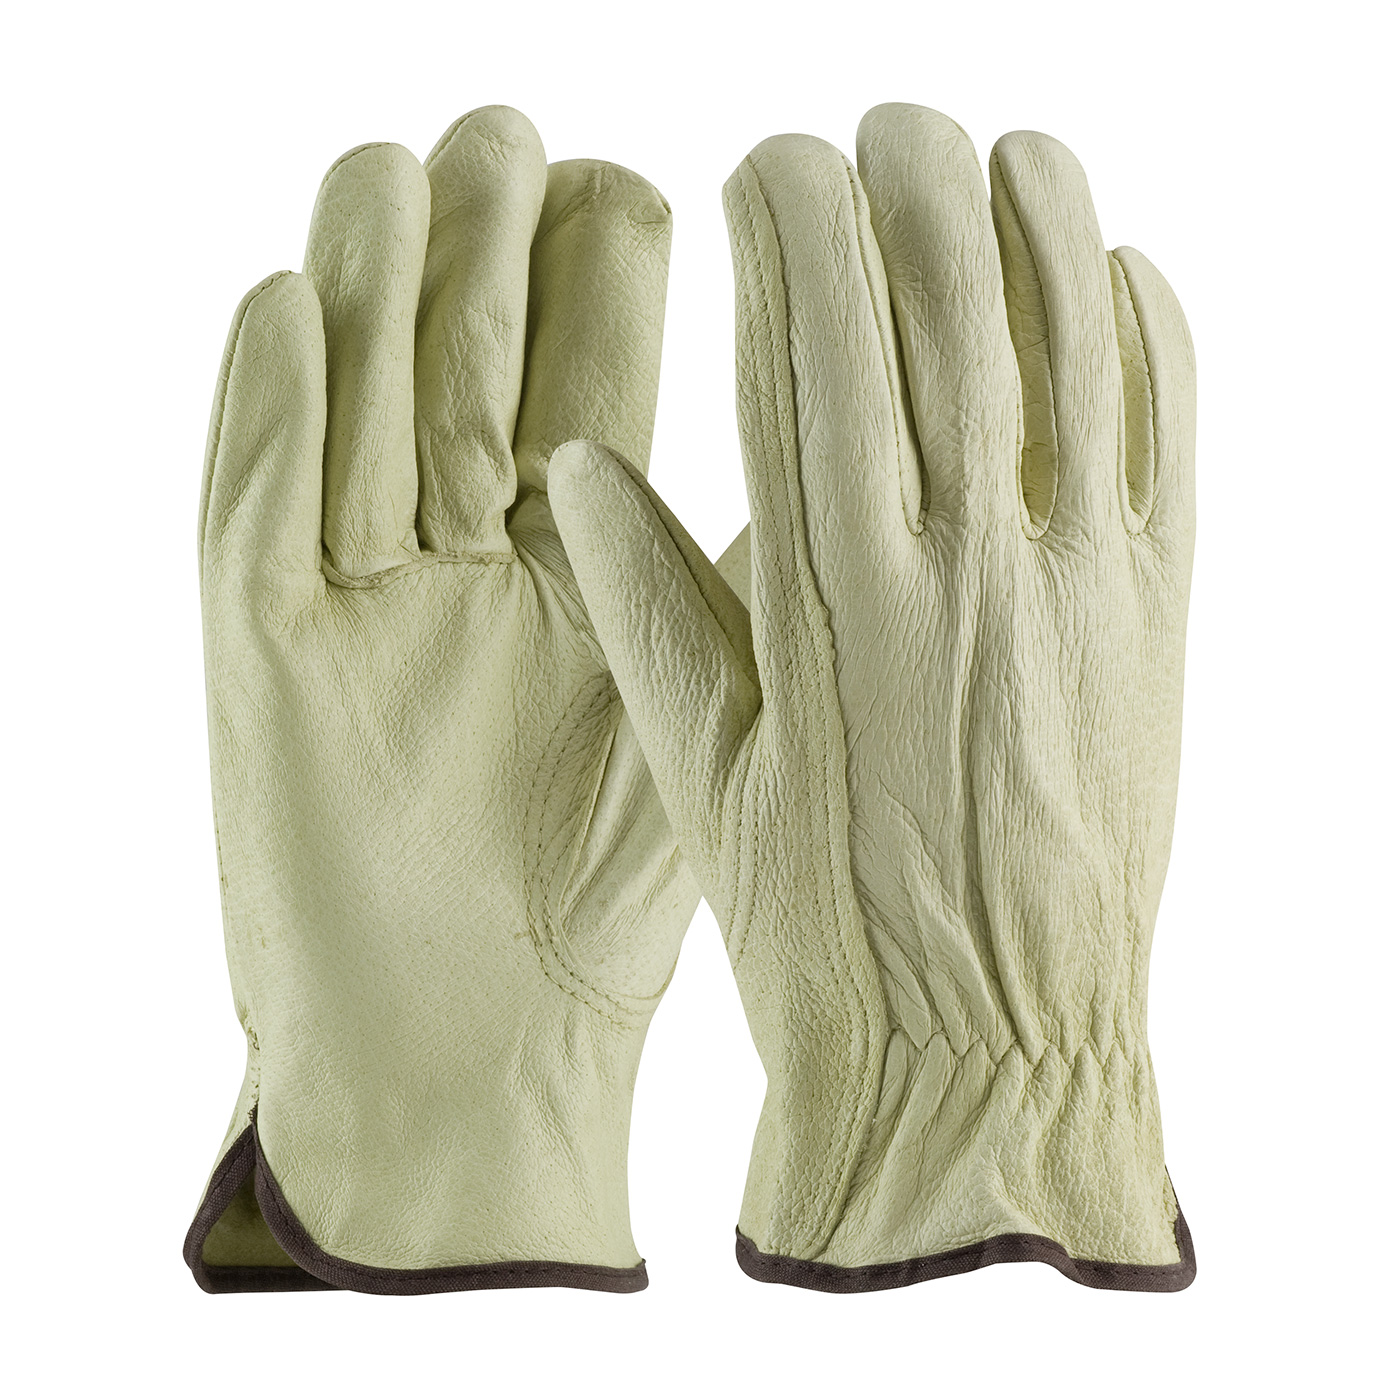 PIP 70-360/L Industry Grade Top Grain Pigskin Leather Drivers Glove - Keystone Thumb - Large PID-70-360 L